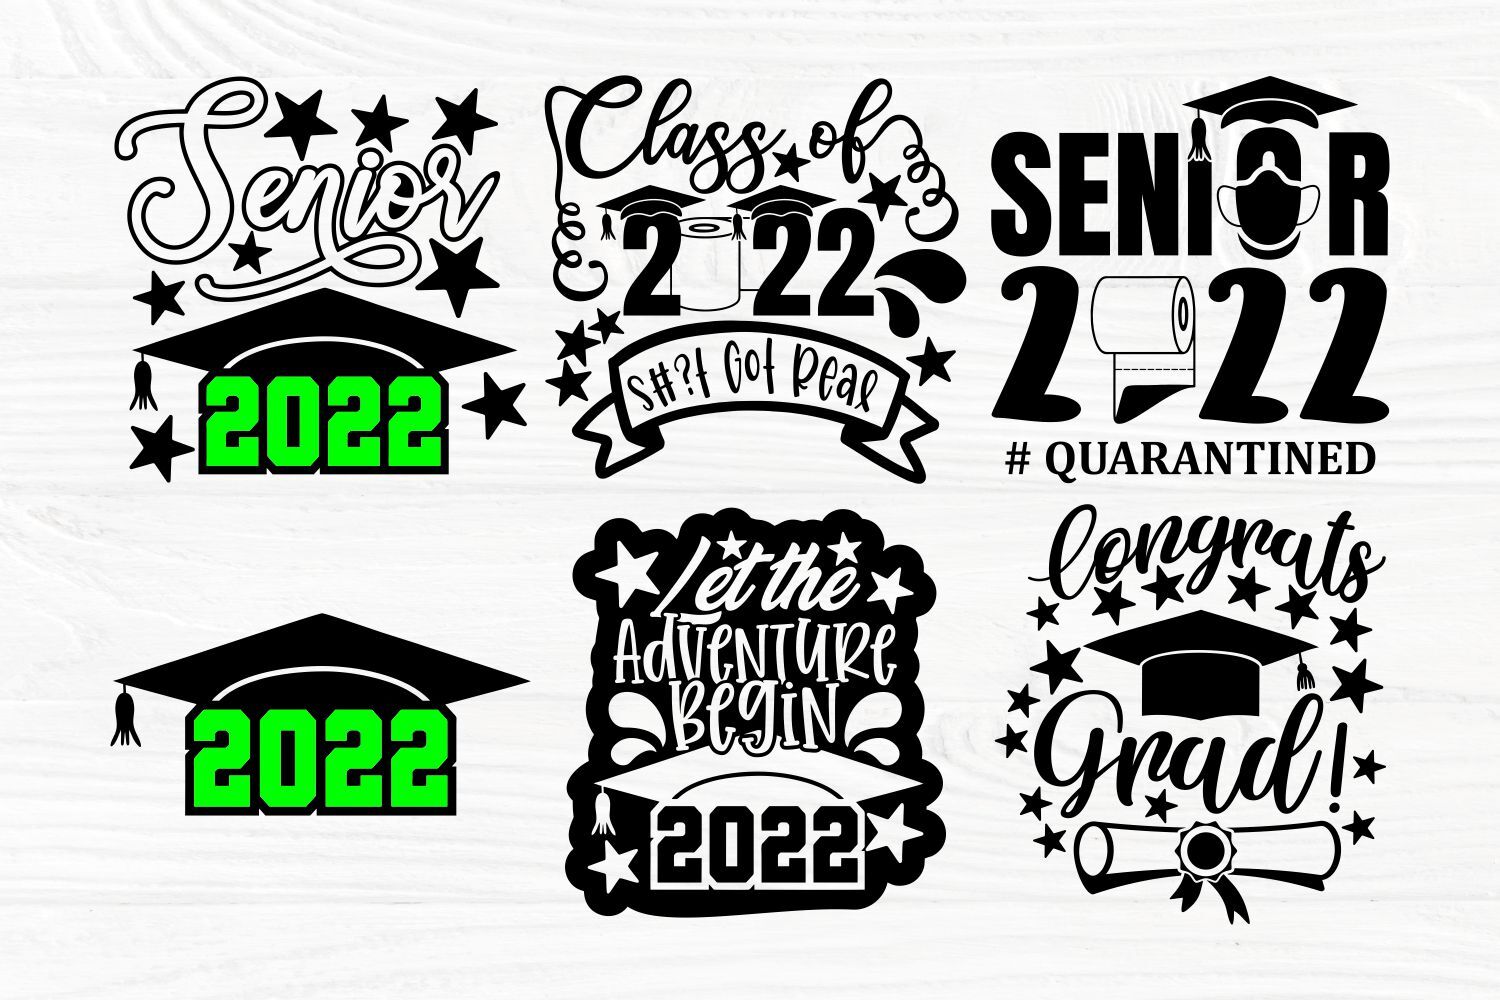 graduating class of 2022 slogans